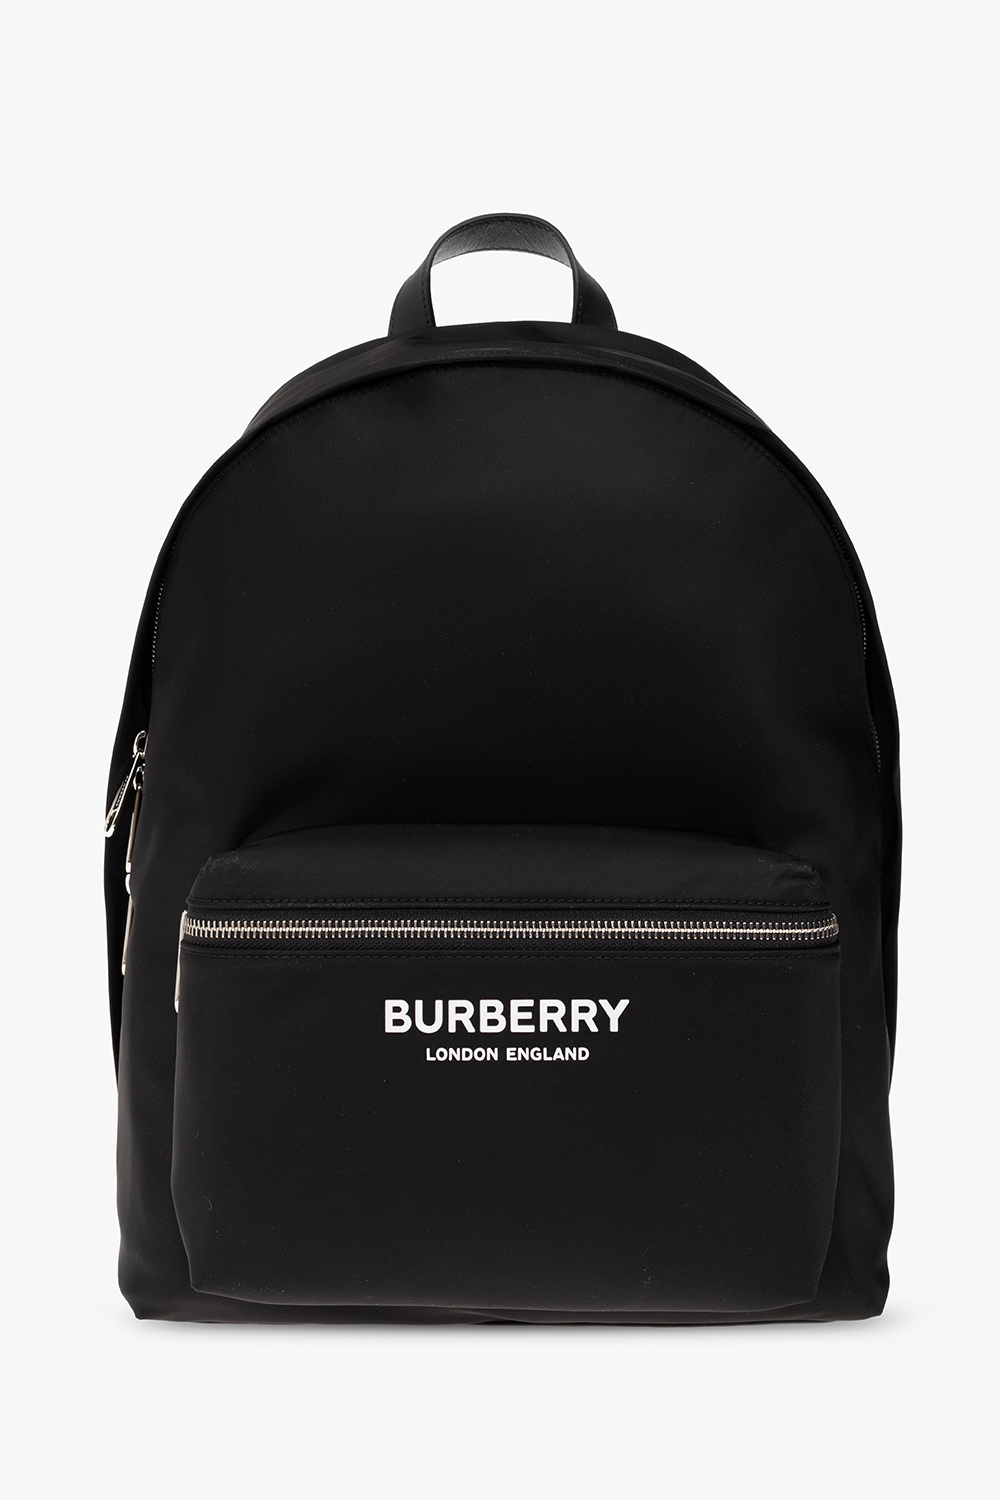 Burberry olympia small shoulder bag burberry bag butterbeige black